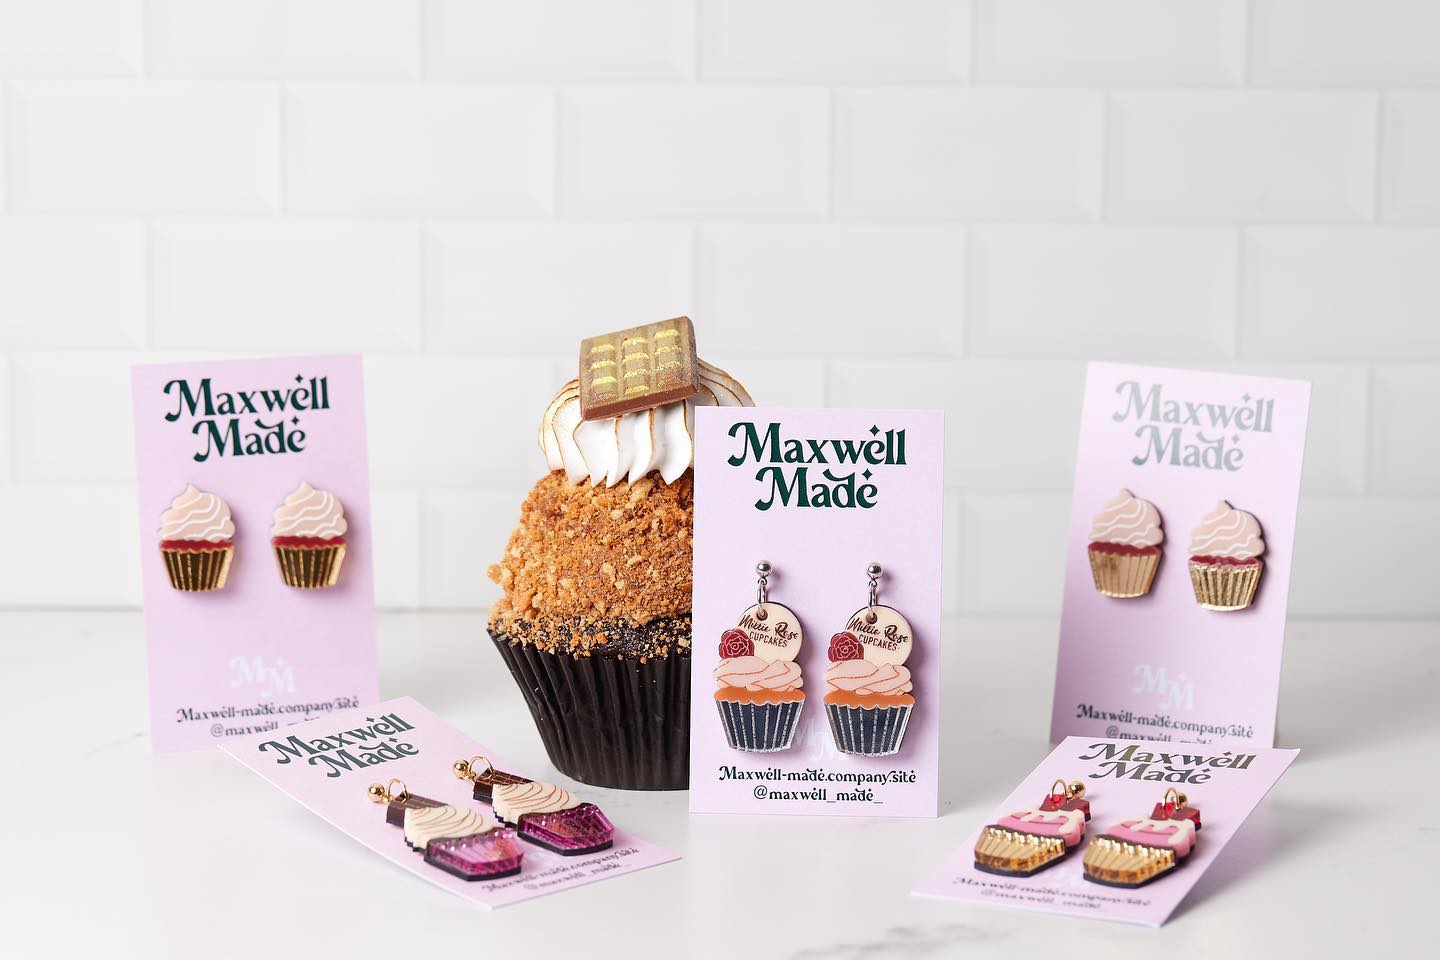 Cupcake Earrings - Maxwell Made